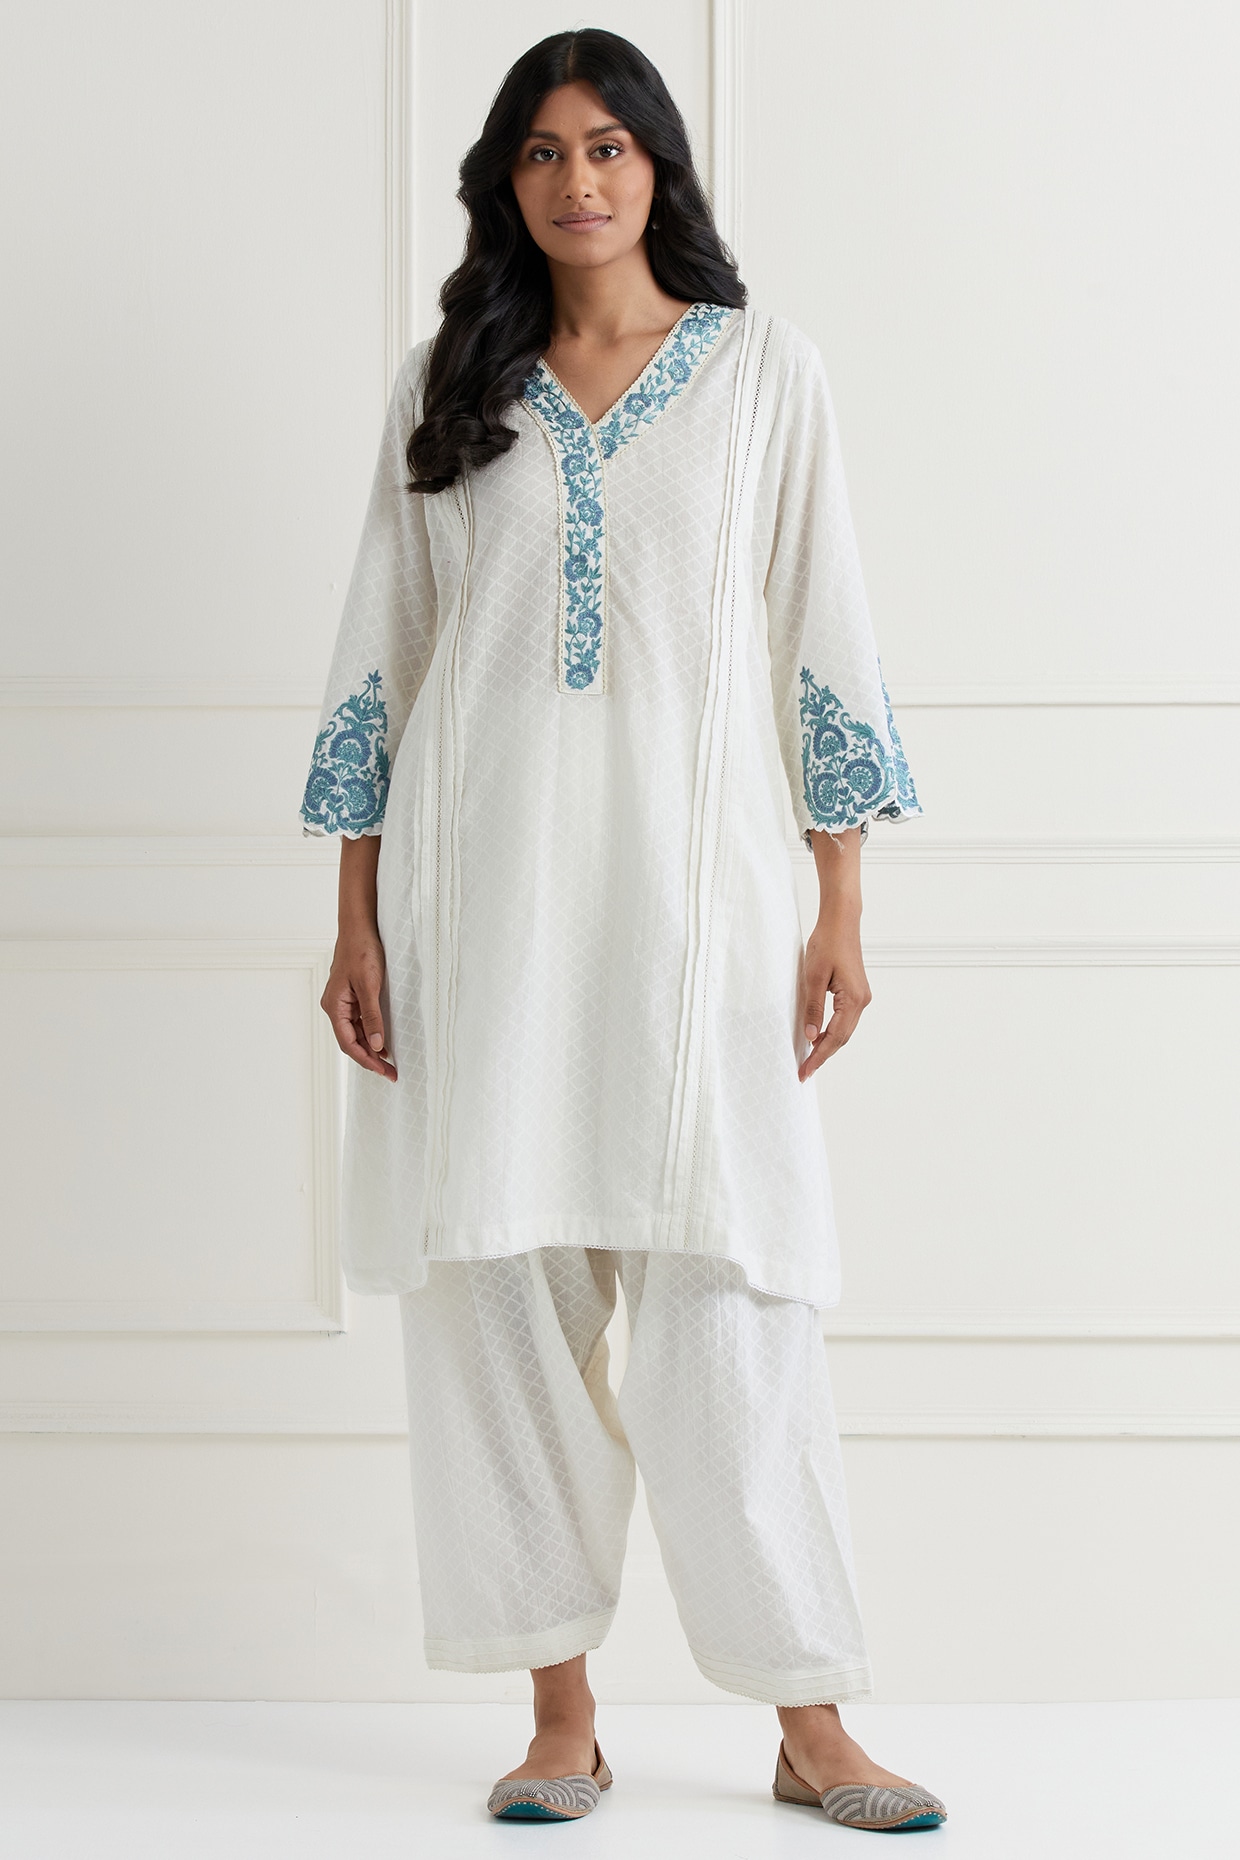 Embellished Green Pakistani Salwar Kameez Trouser Dress – Nameera by Farooq